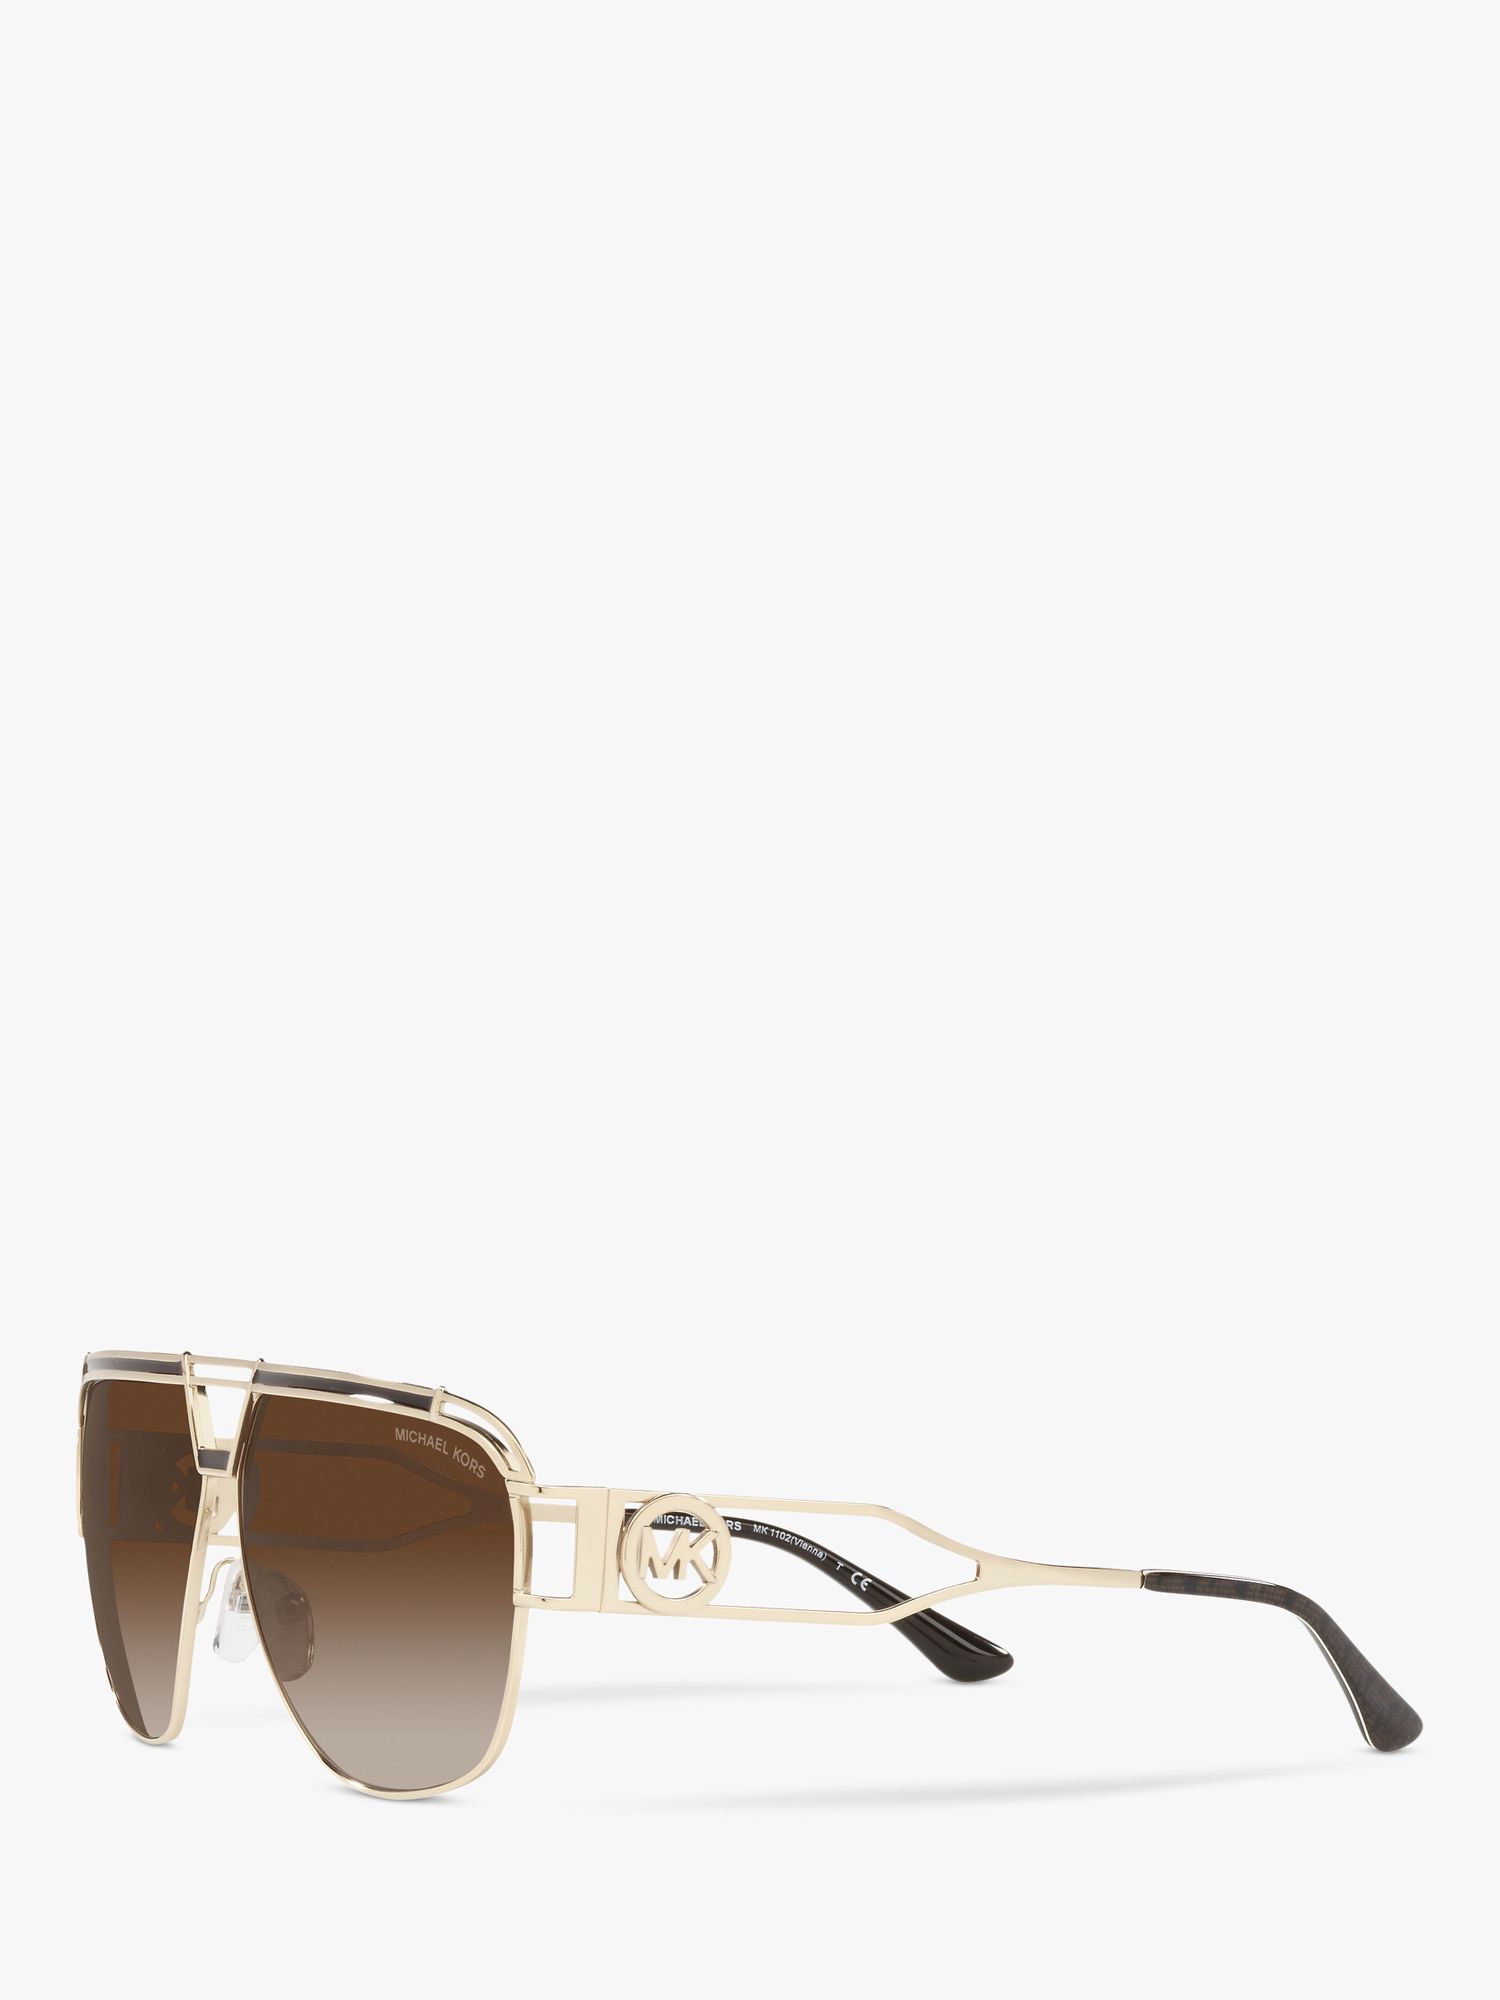 Michael Kors MK1102 Women's Vienna Aviator Sunglasses, Gold/Brown Gradient  at John Lewis & Partners